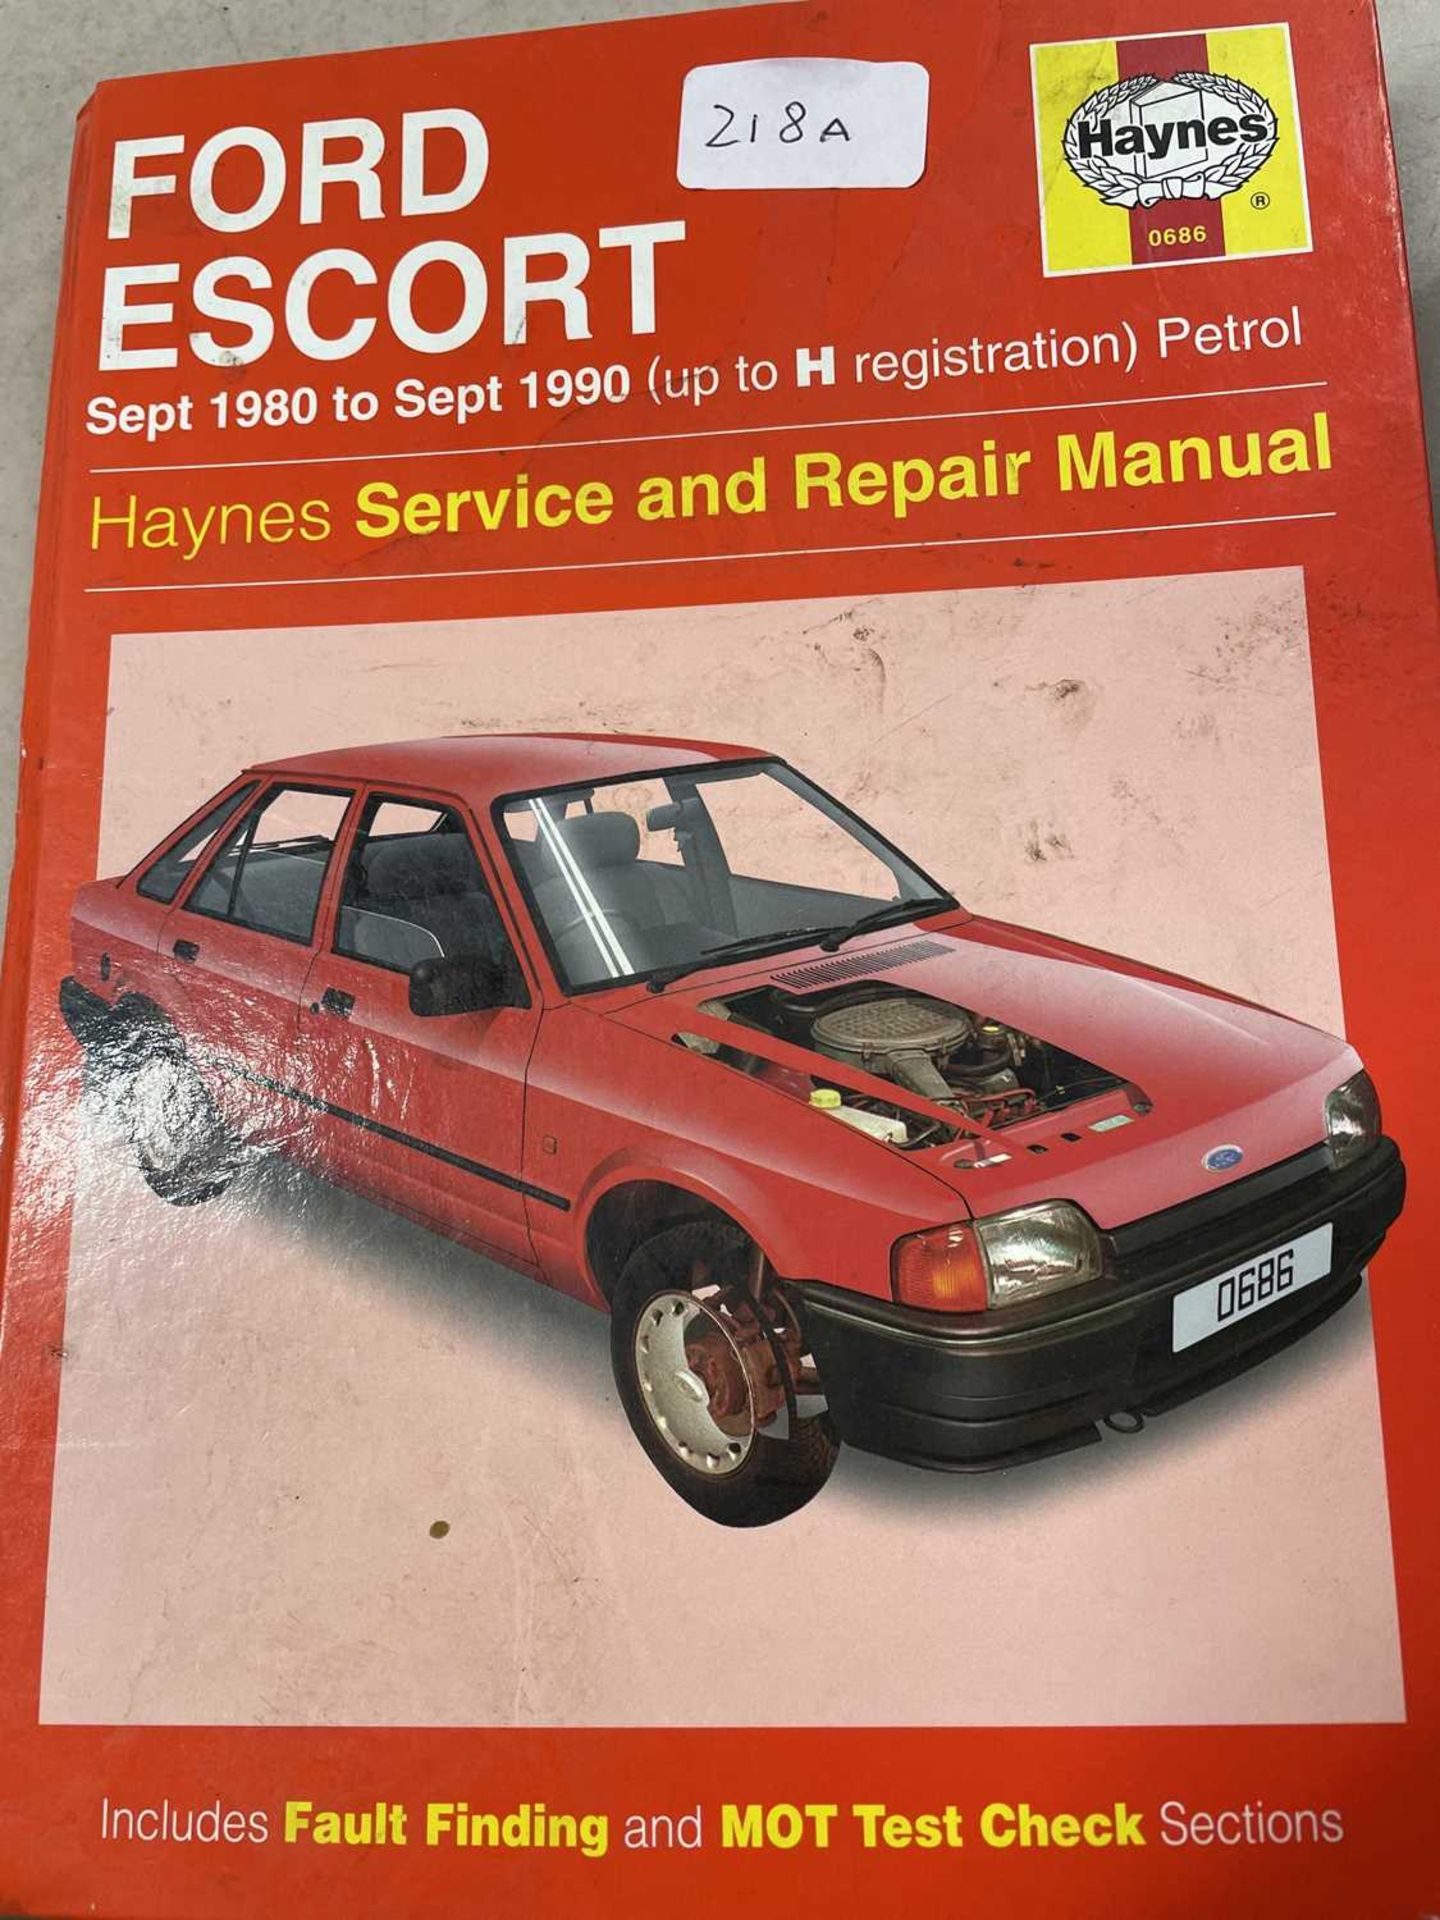 Ford Escort Haynes manual 1980-1990